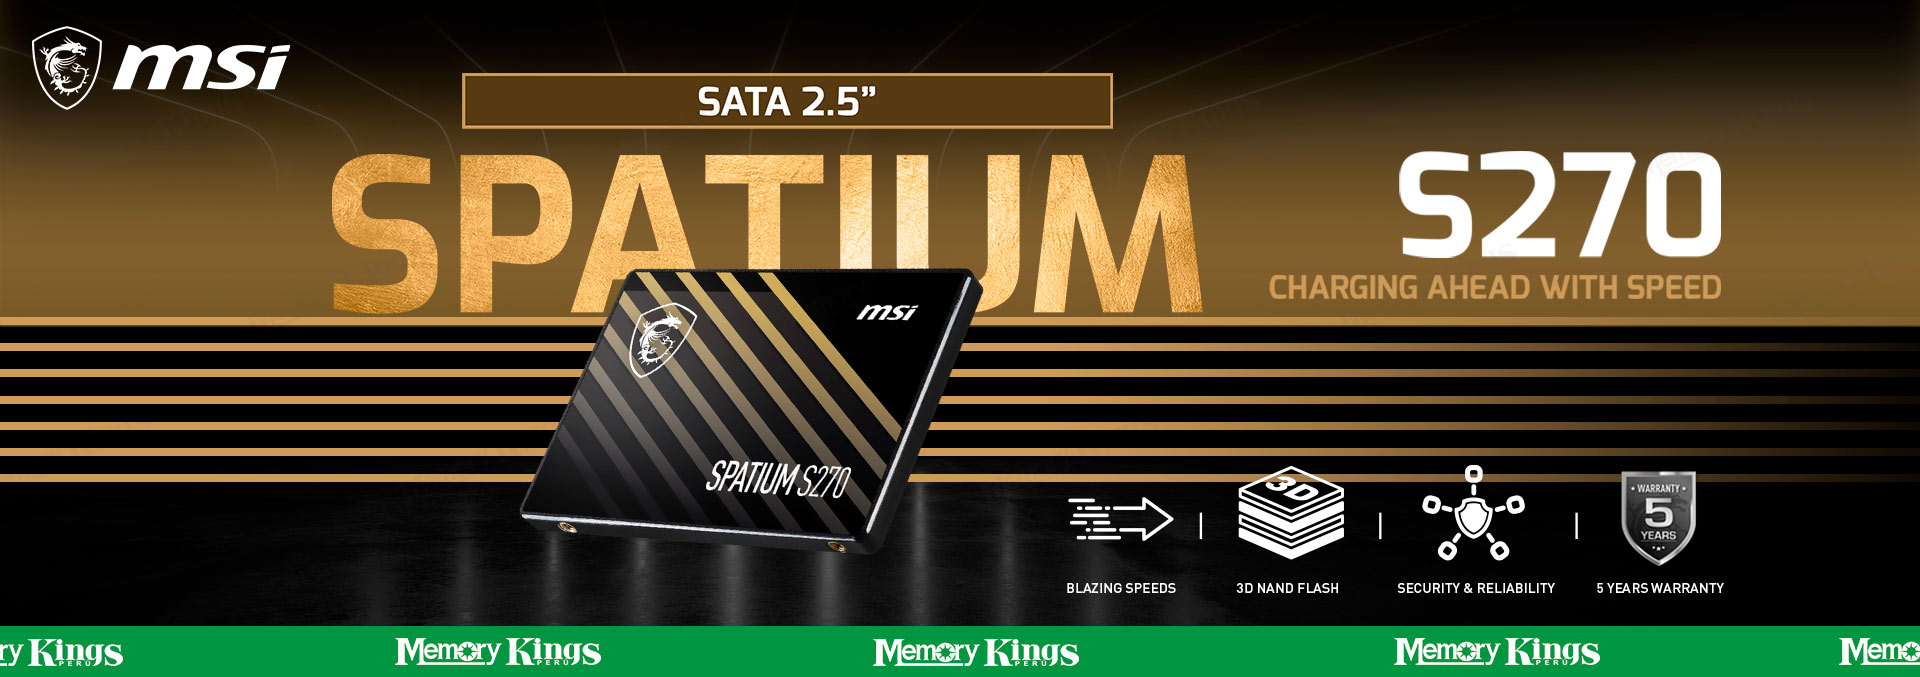 033526 - UNIDAD SSD 2.5 SATA 240GB MSI S270 SPATIUM